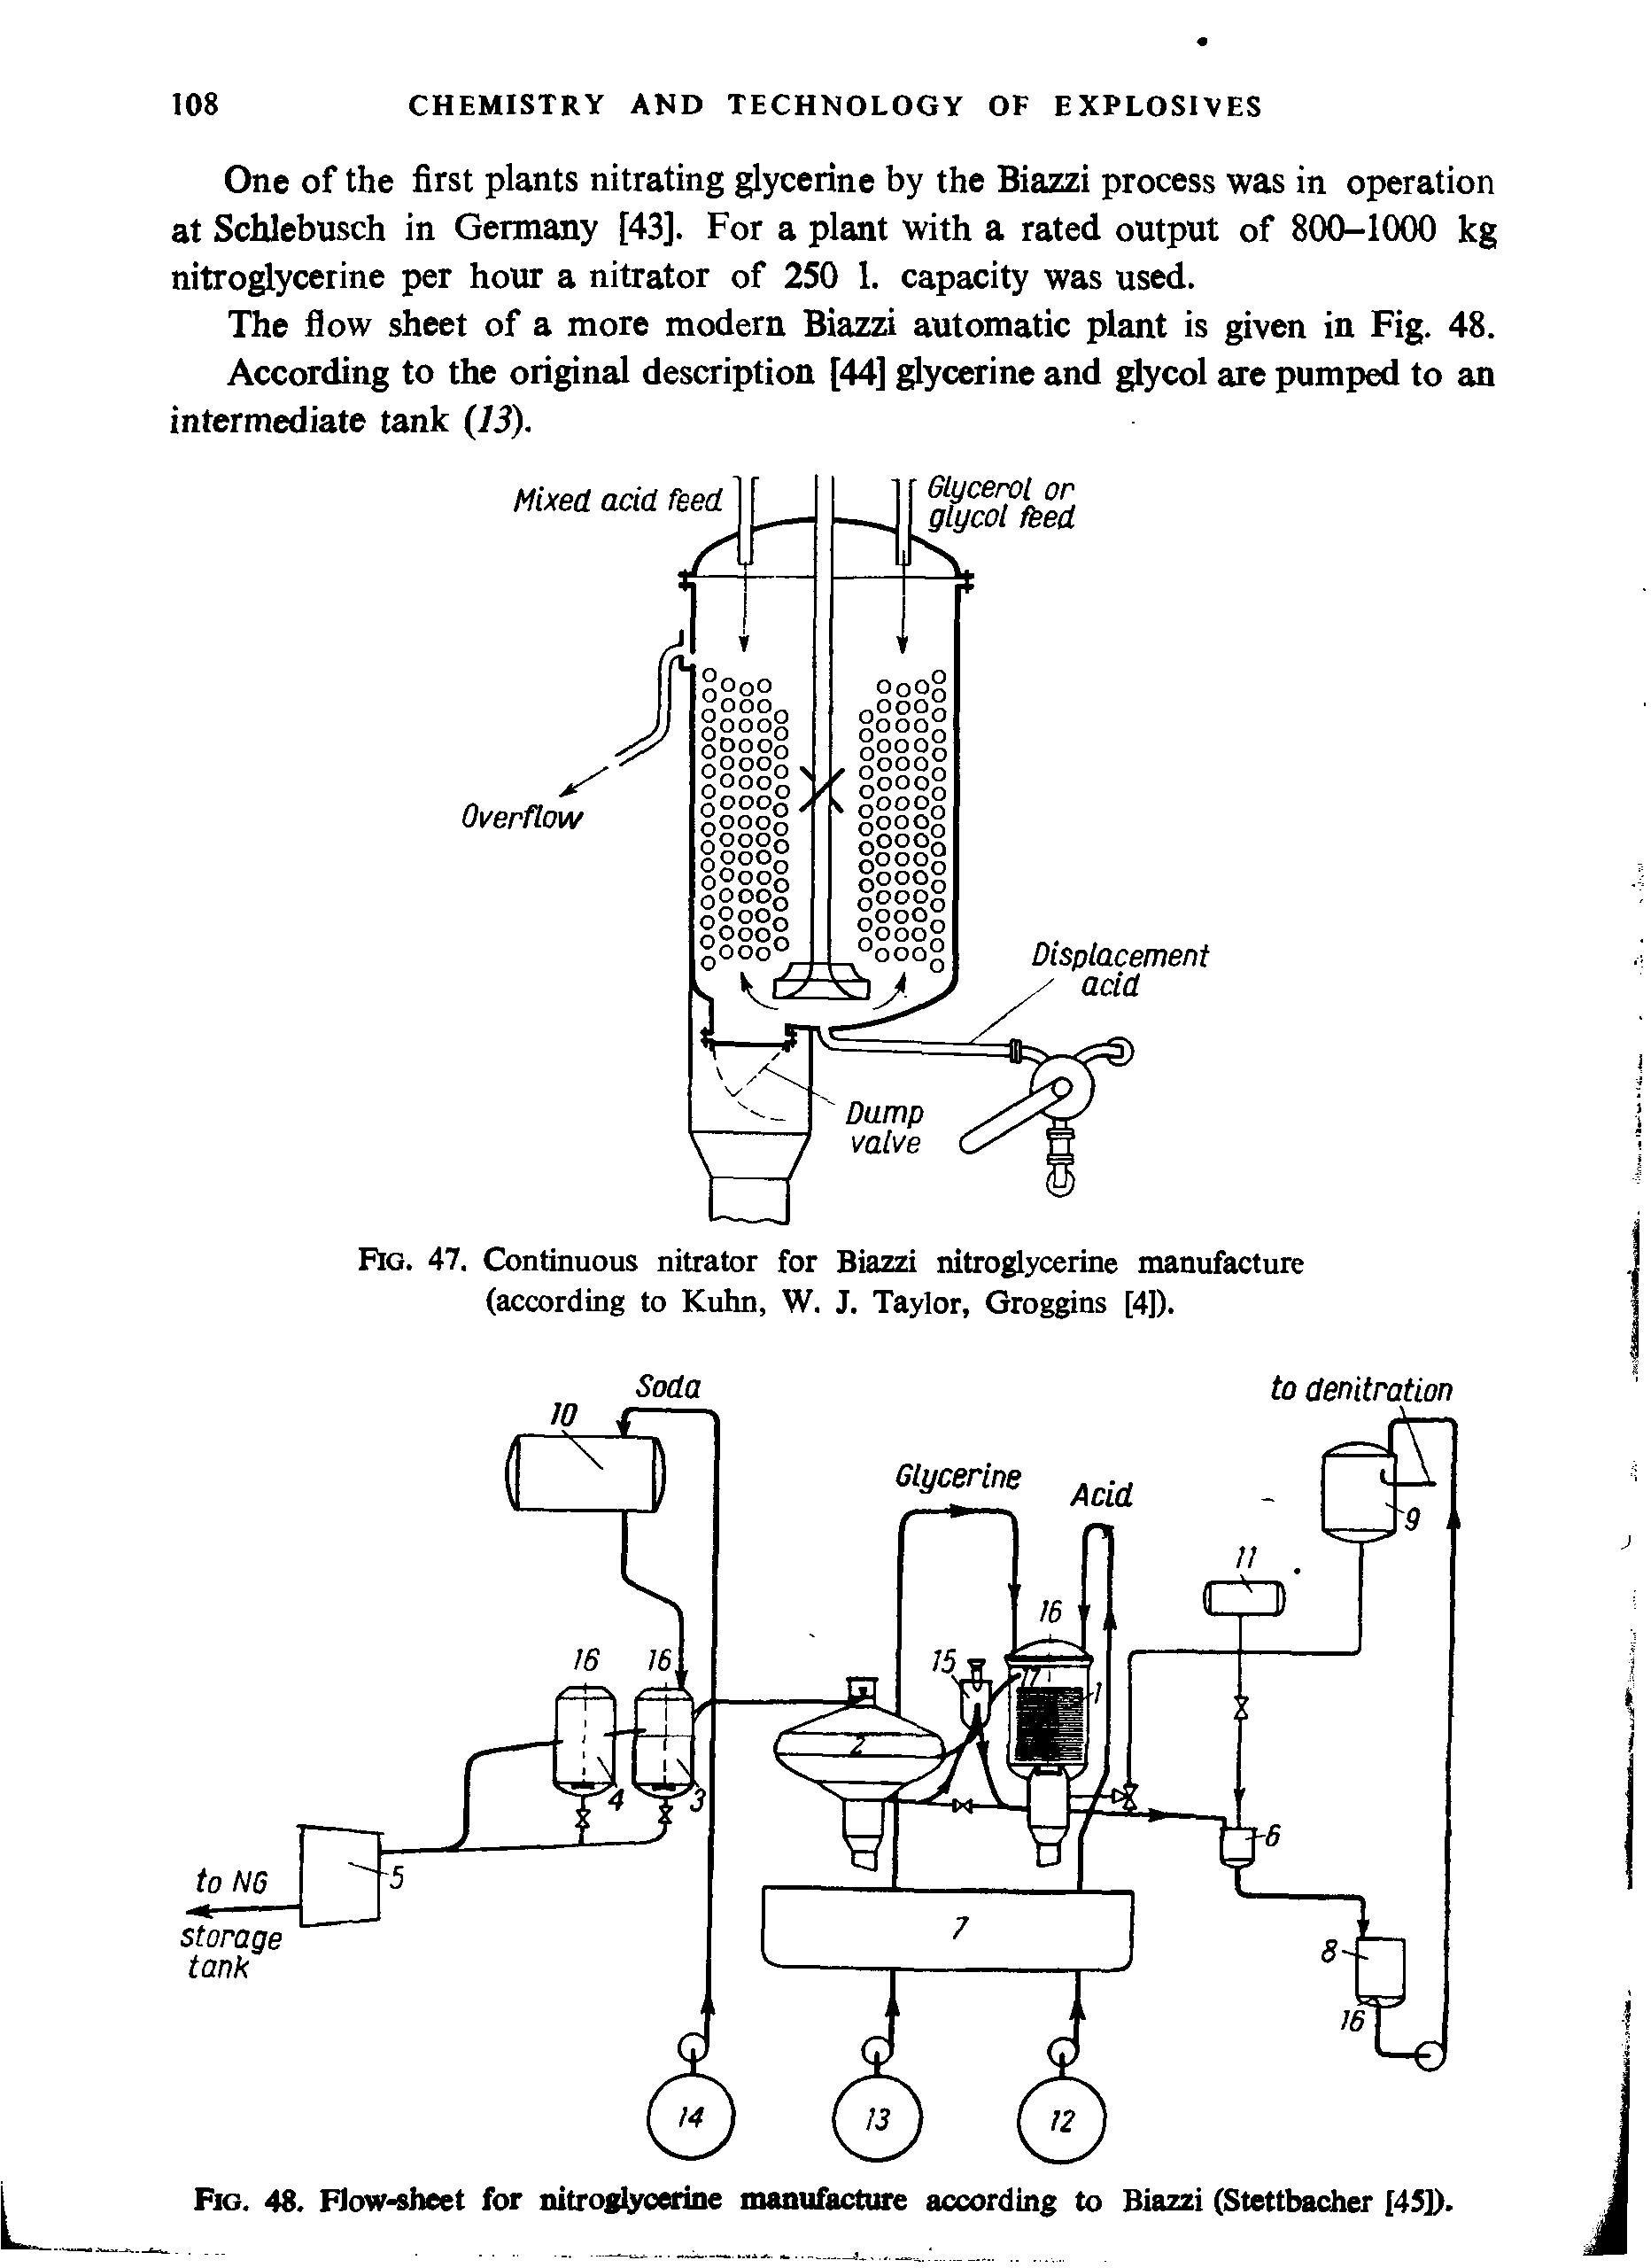 Fig. 48. Flow-sheet for nitroglycerine manufacture according to Biazzi (Stettbacher [45]).